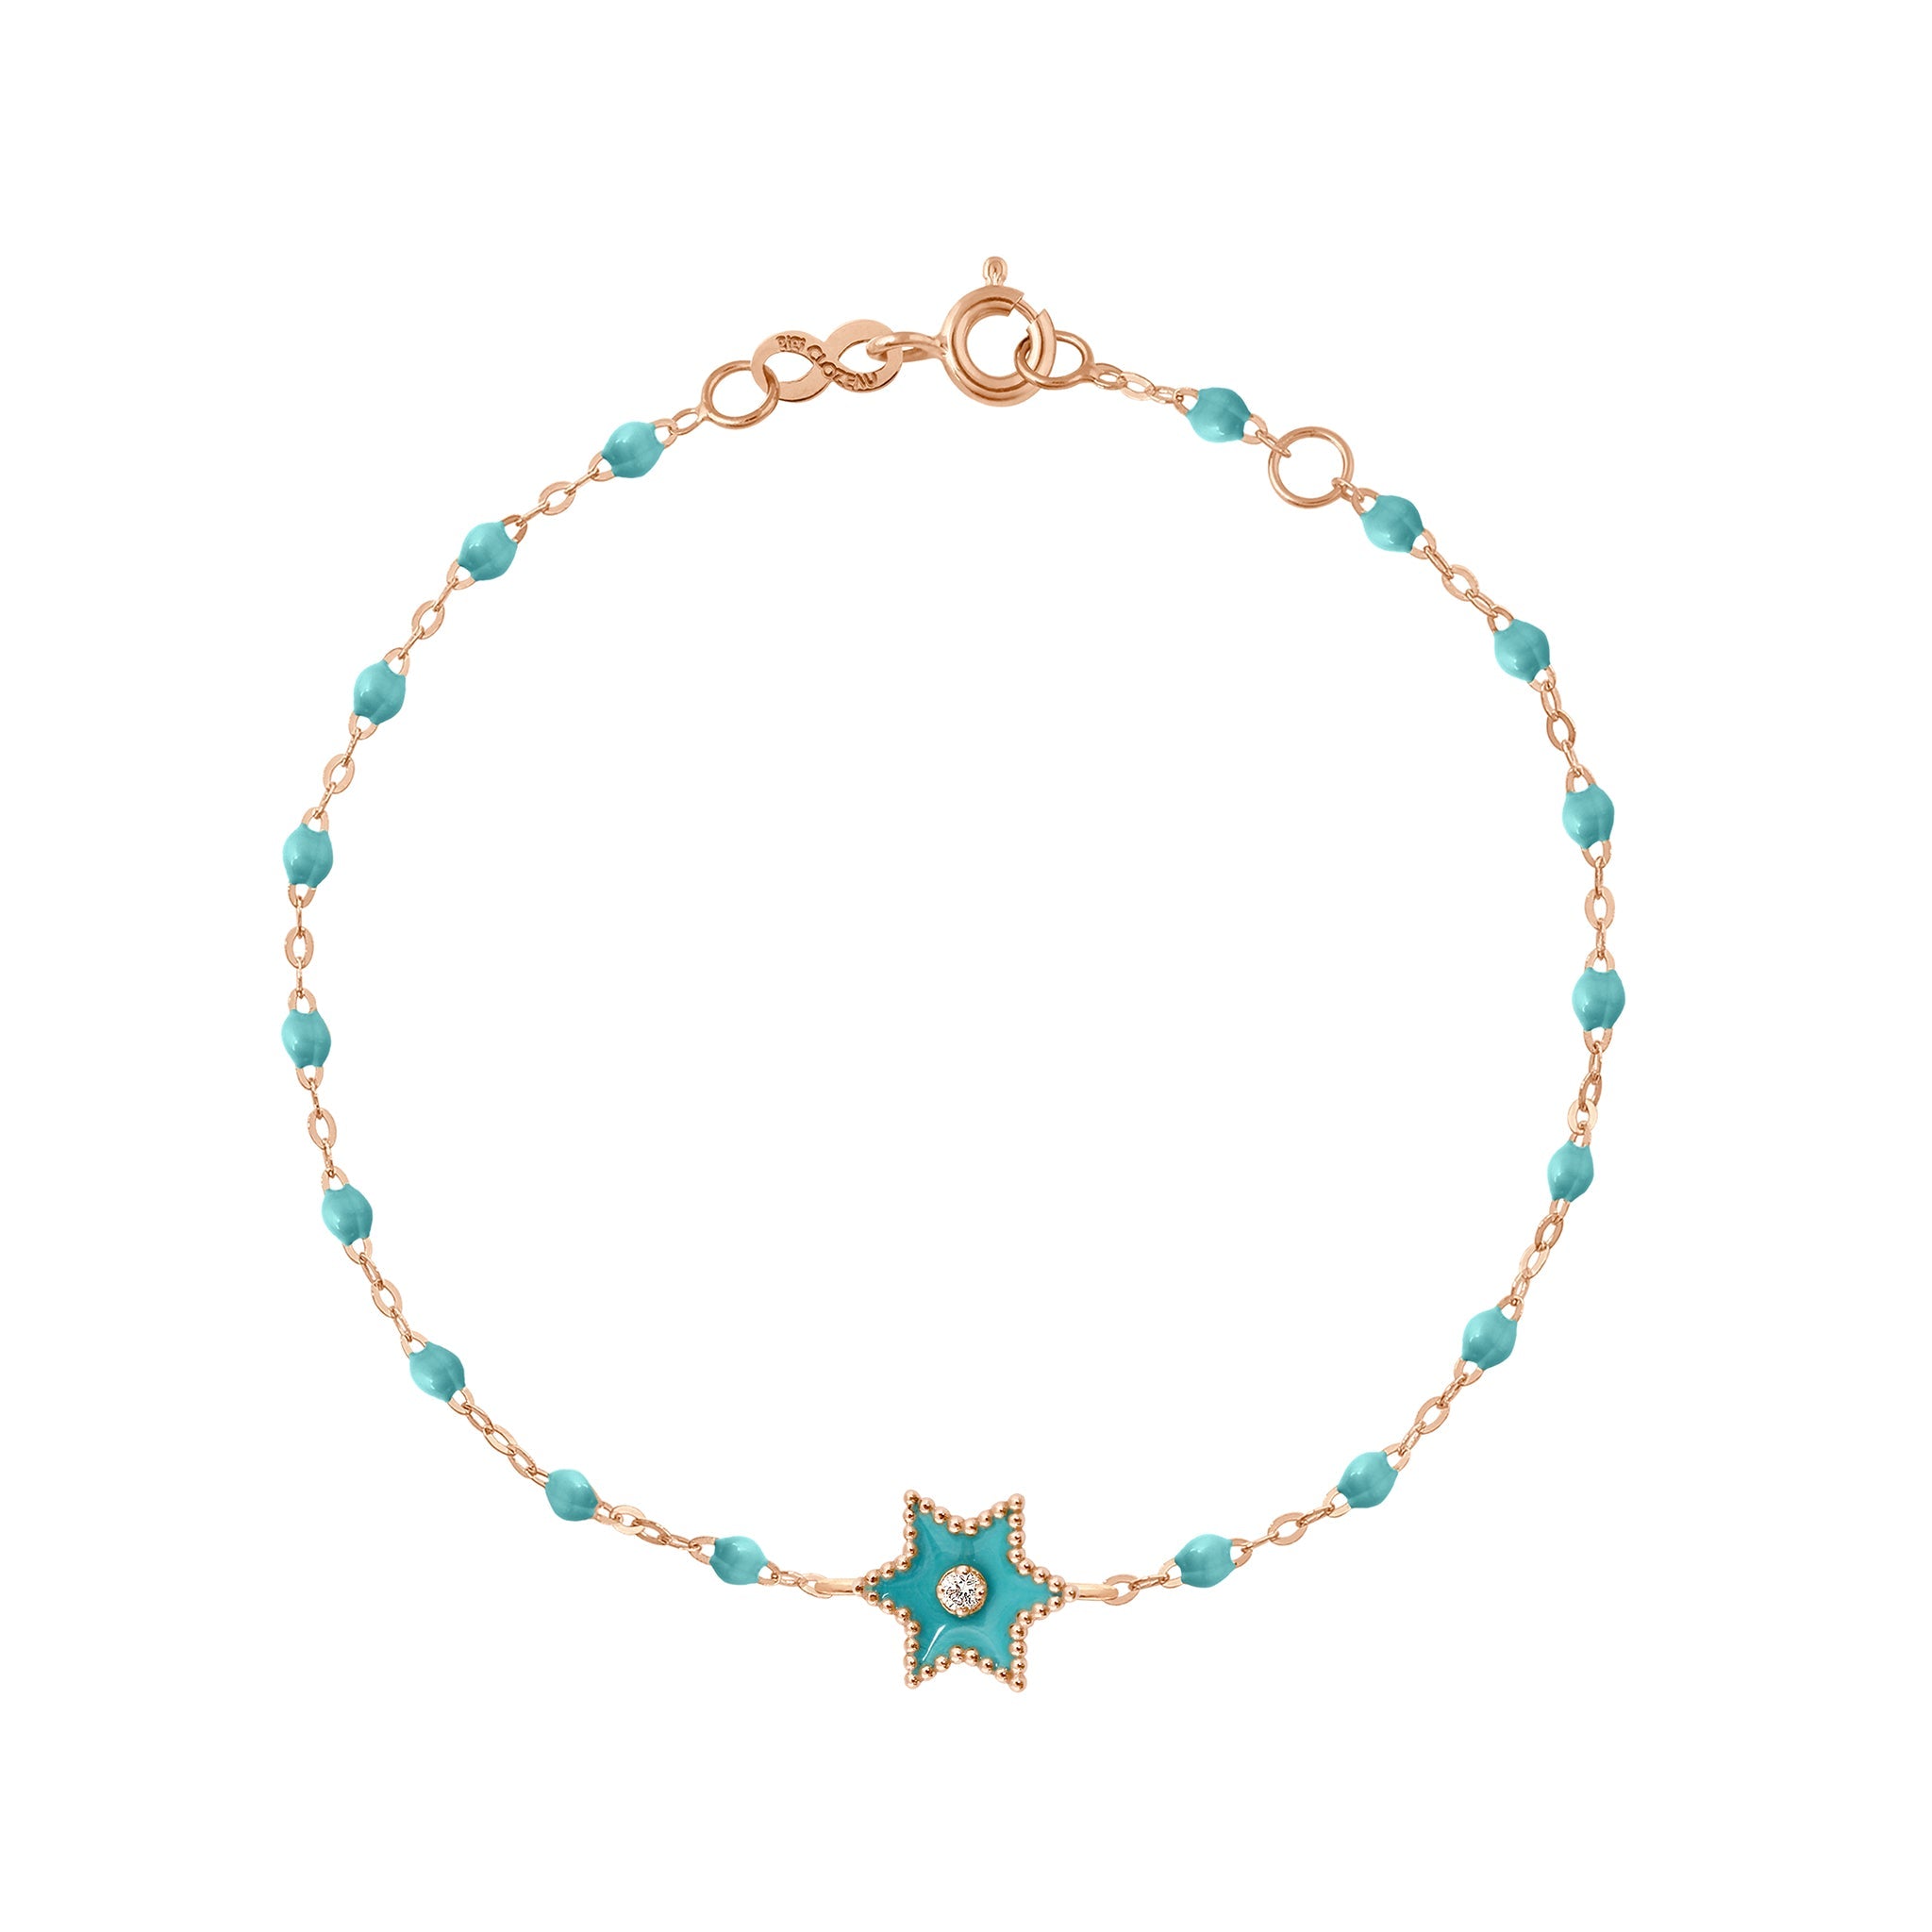 Bracelet Etoile Star résine turquoise vert, or rose, 17 cm pirate Référence :  b3st001r3317di -1